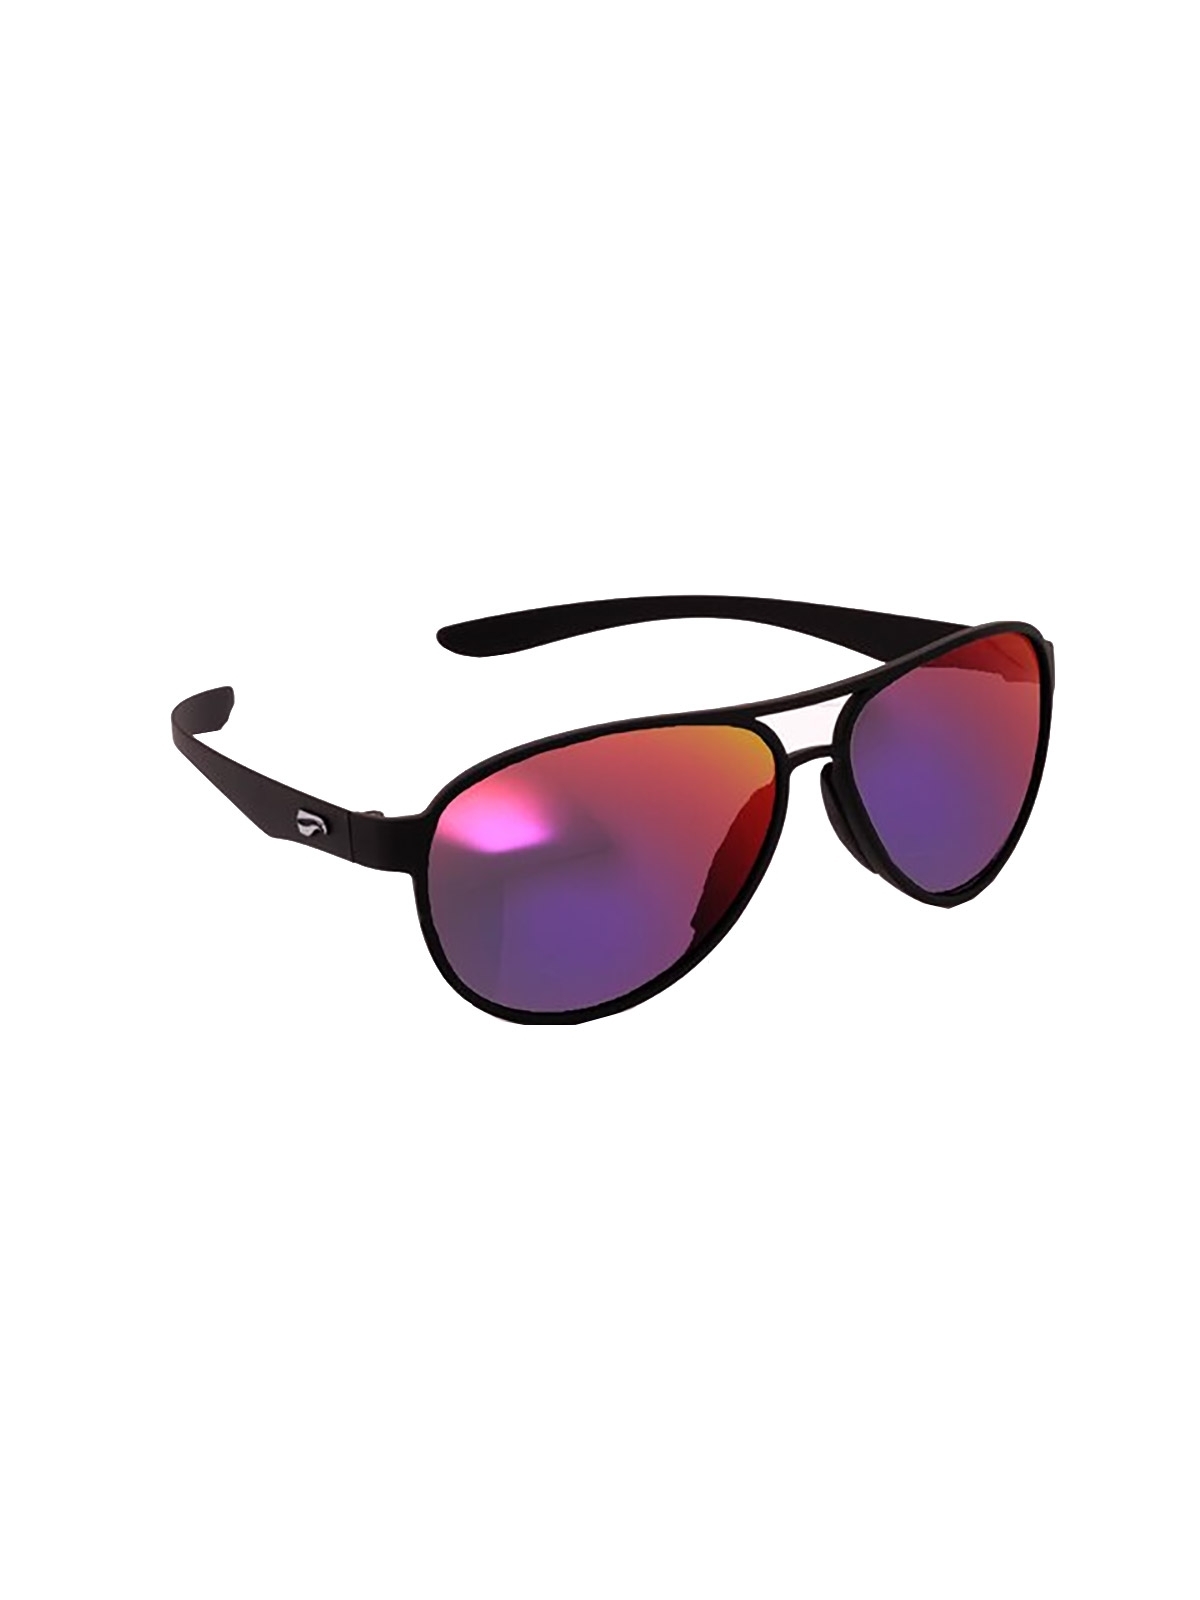 Flying Eyes Sonnenbrille Kestrel Aviator - Rahmen matt schwarz, Linsen Sunset (verspiegelt)